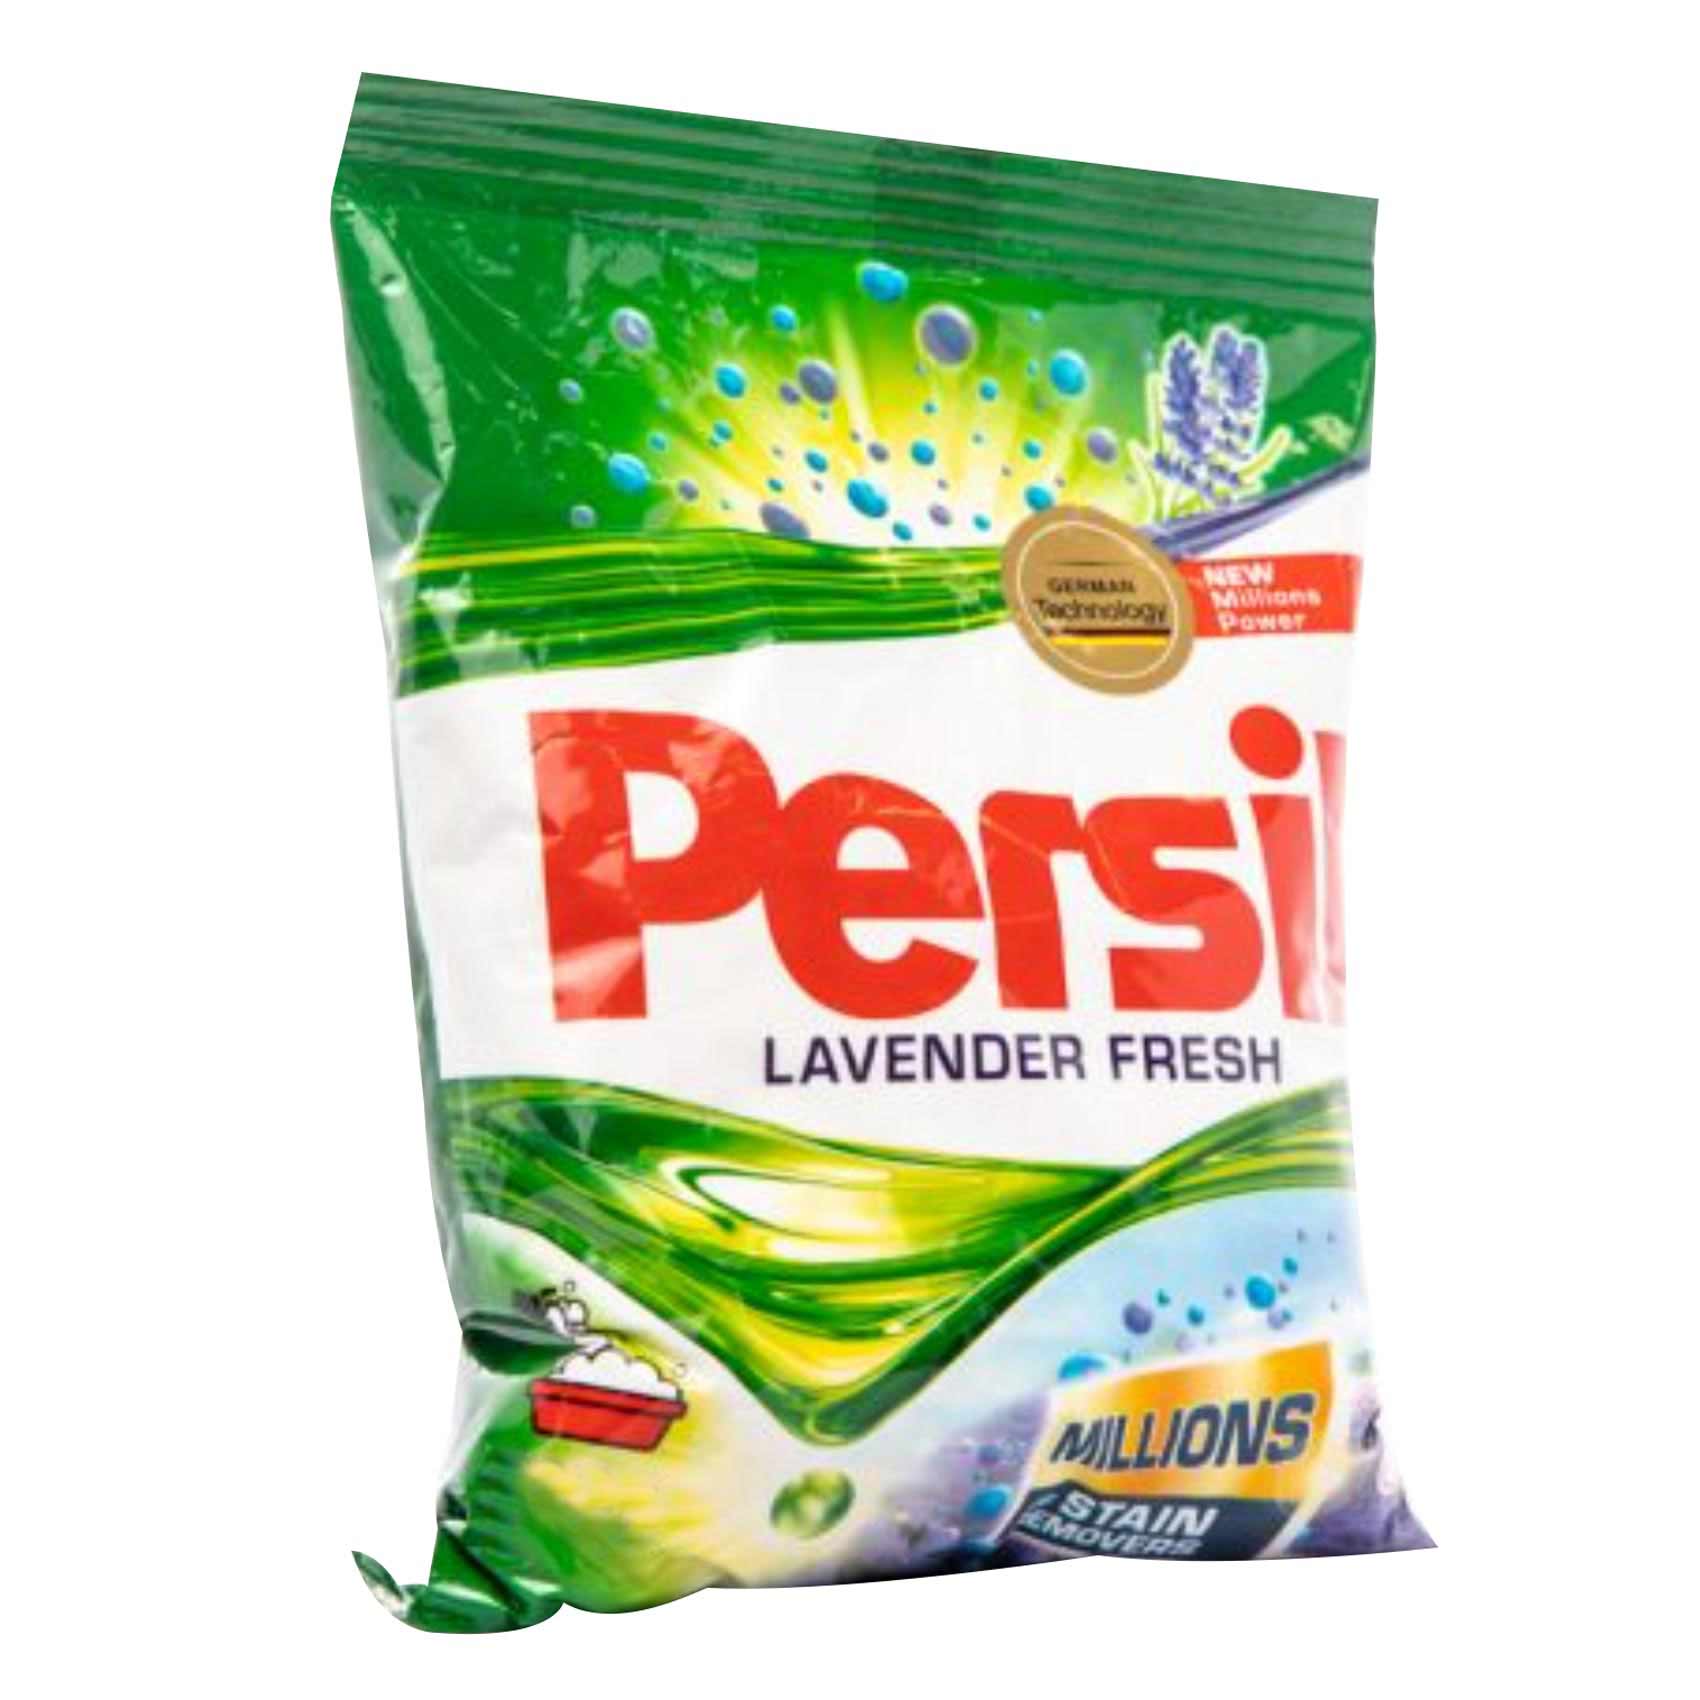 Persil Lavender Fresh Hand Wash Powder 2kg